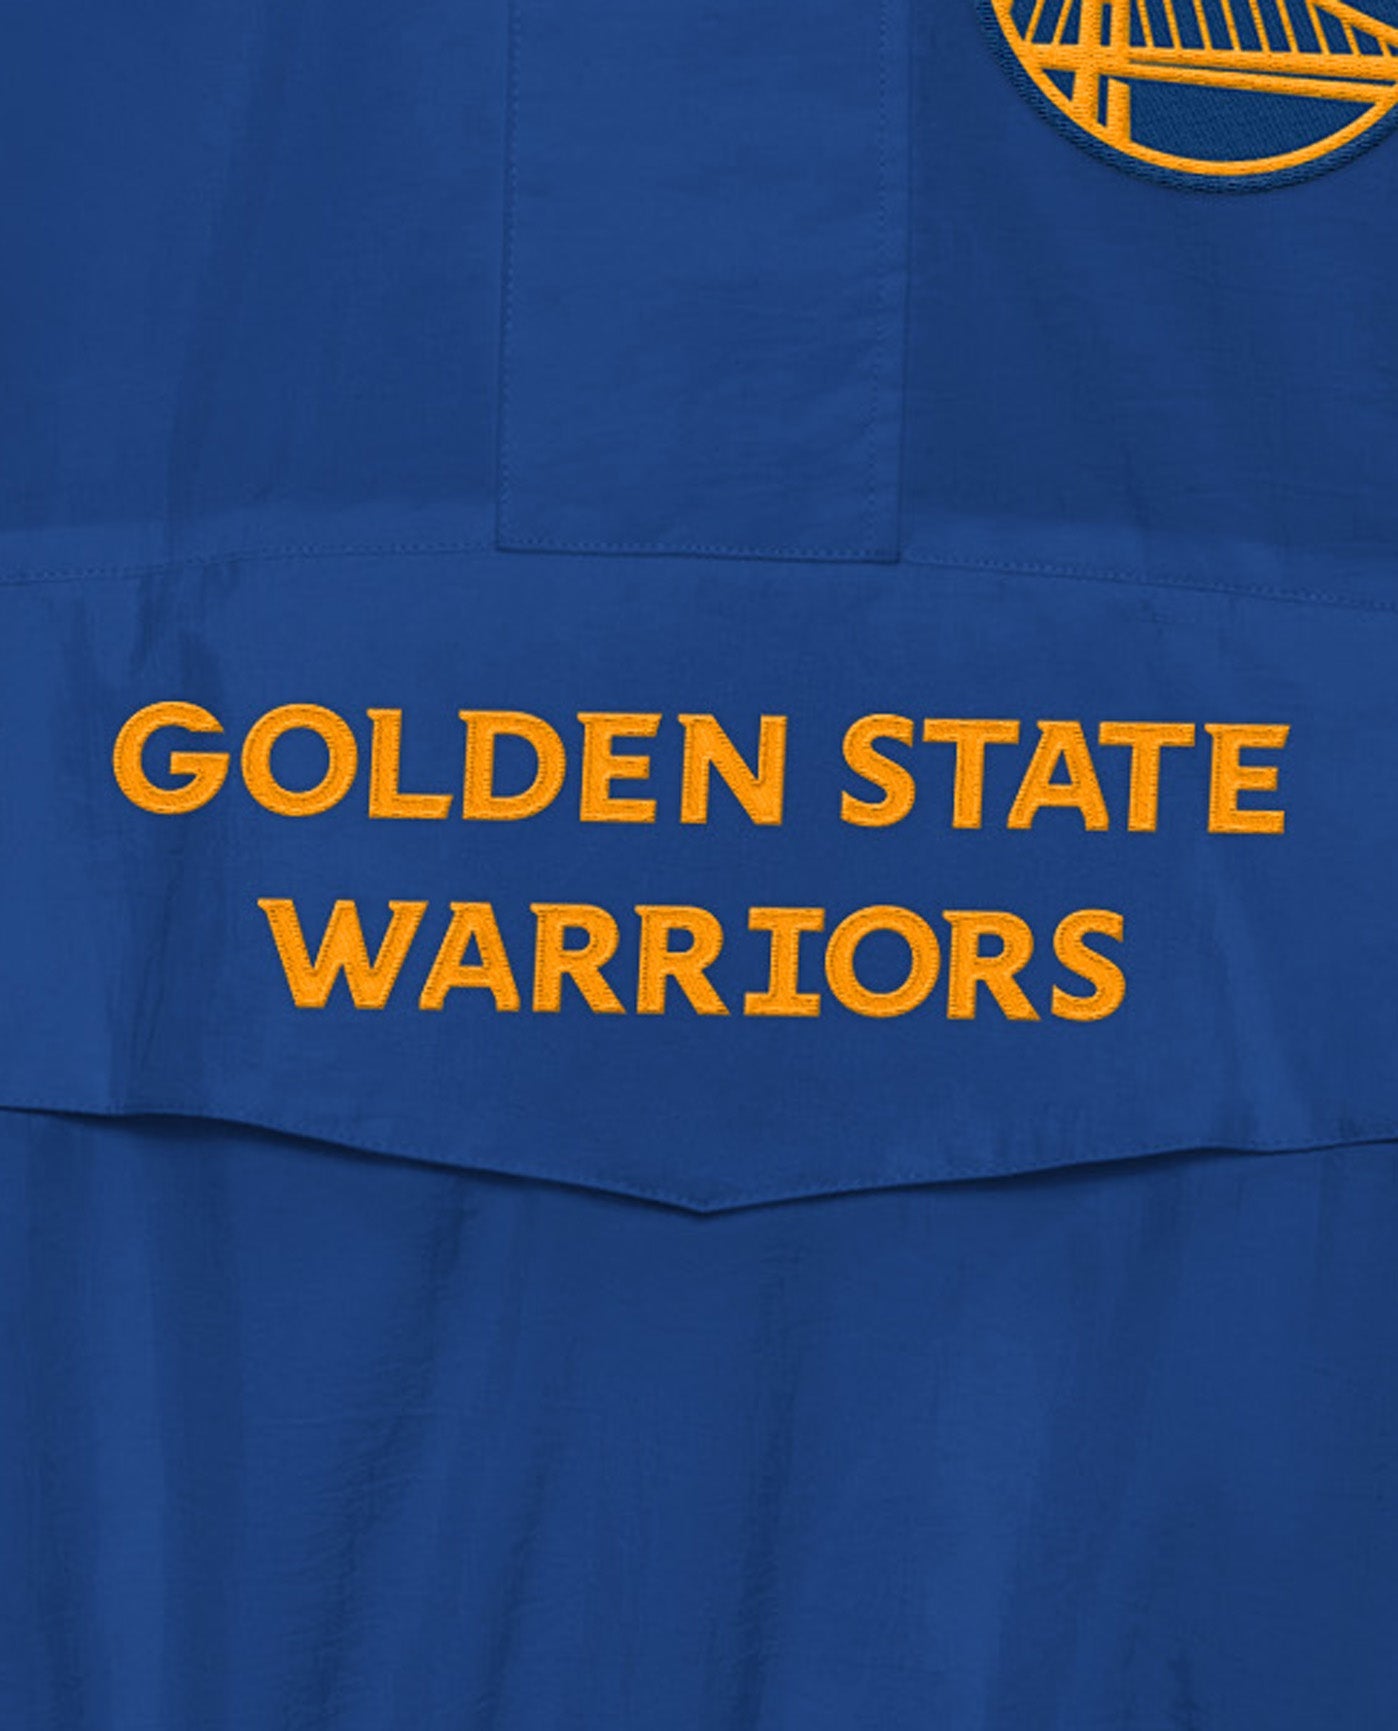 golden state warriors men's clothing